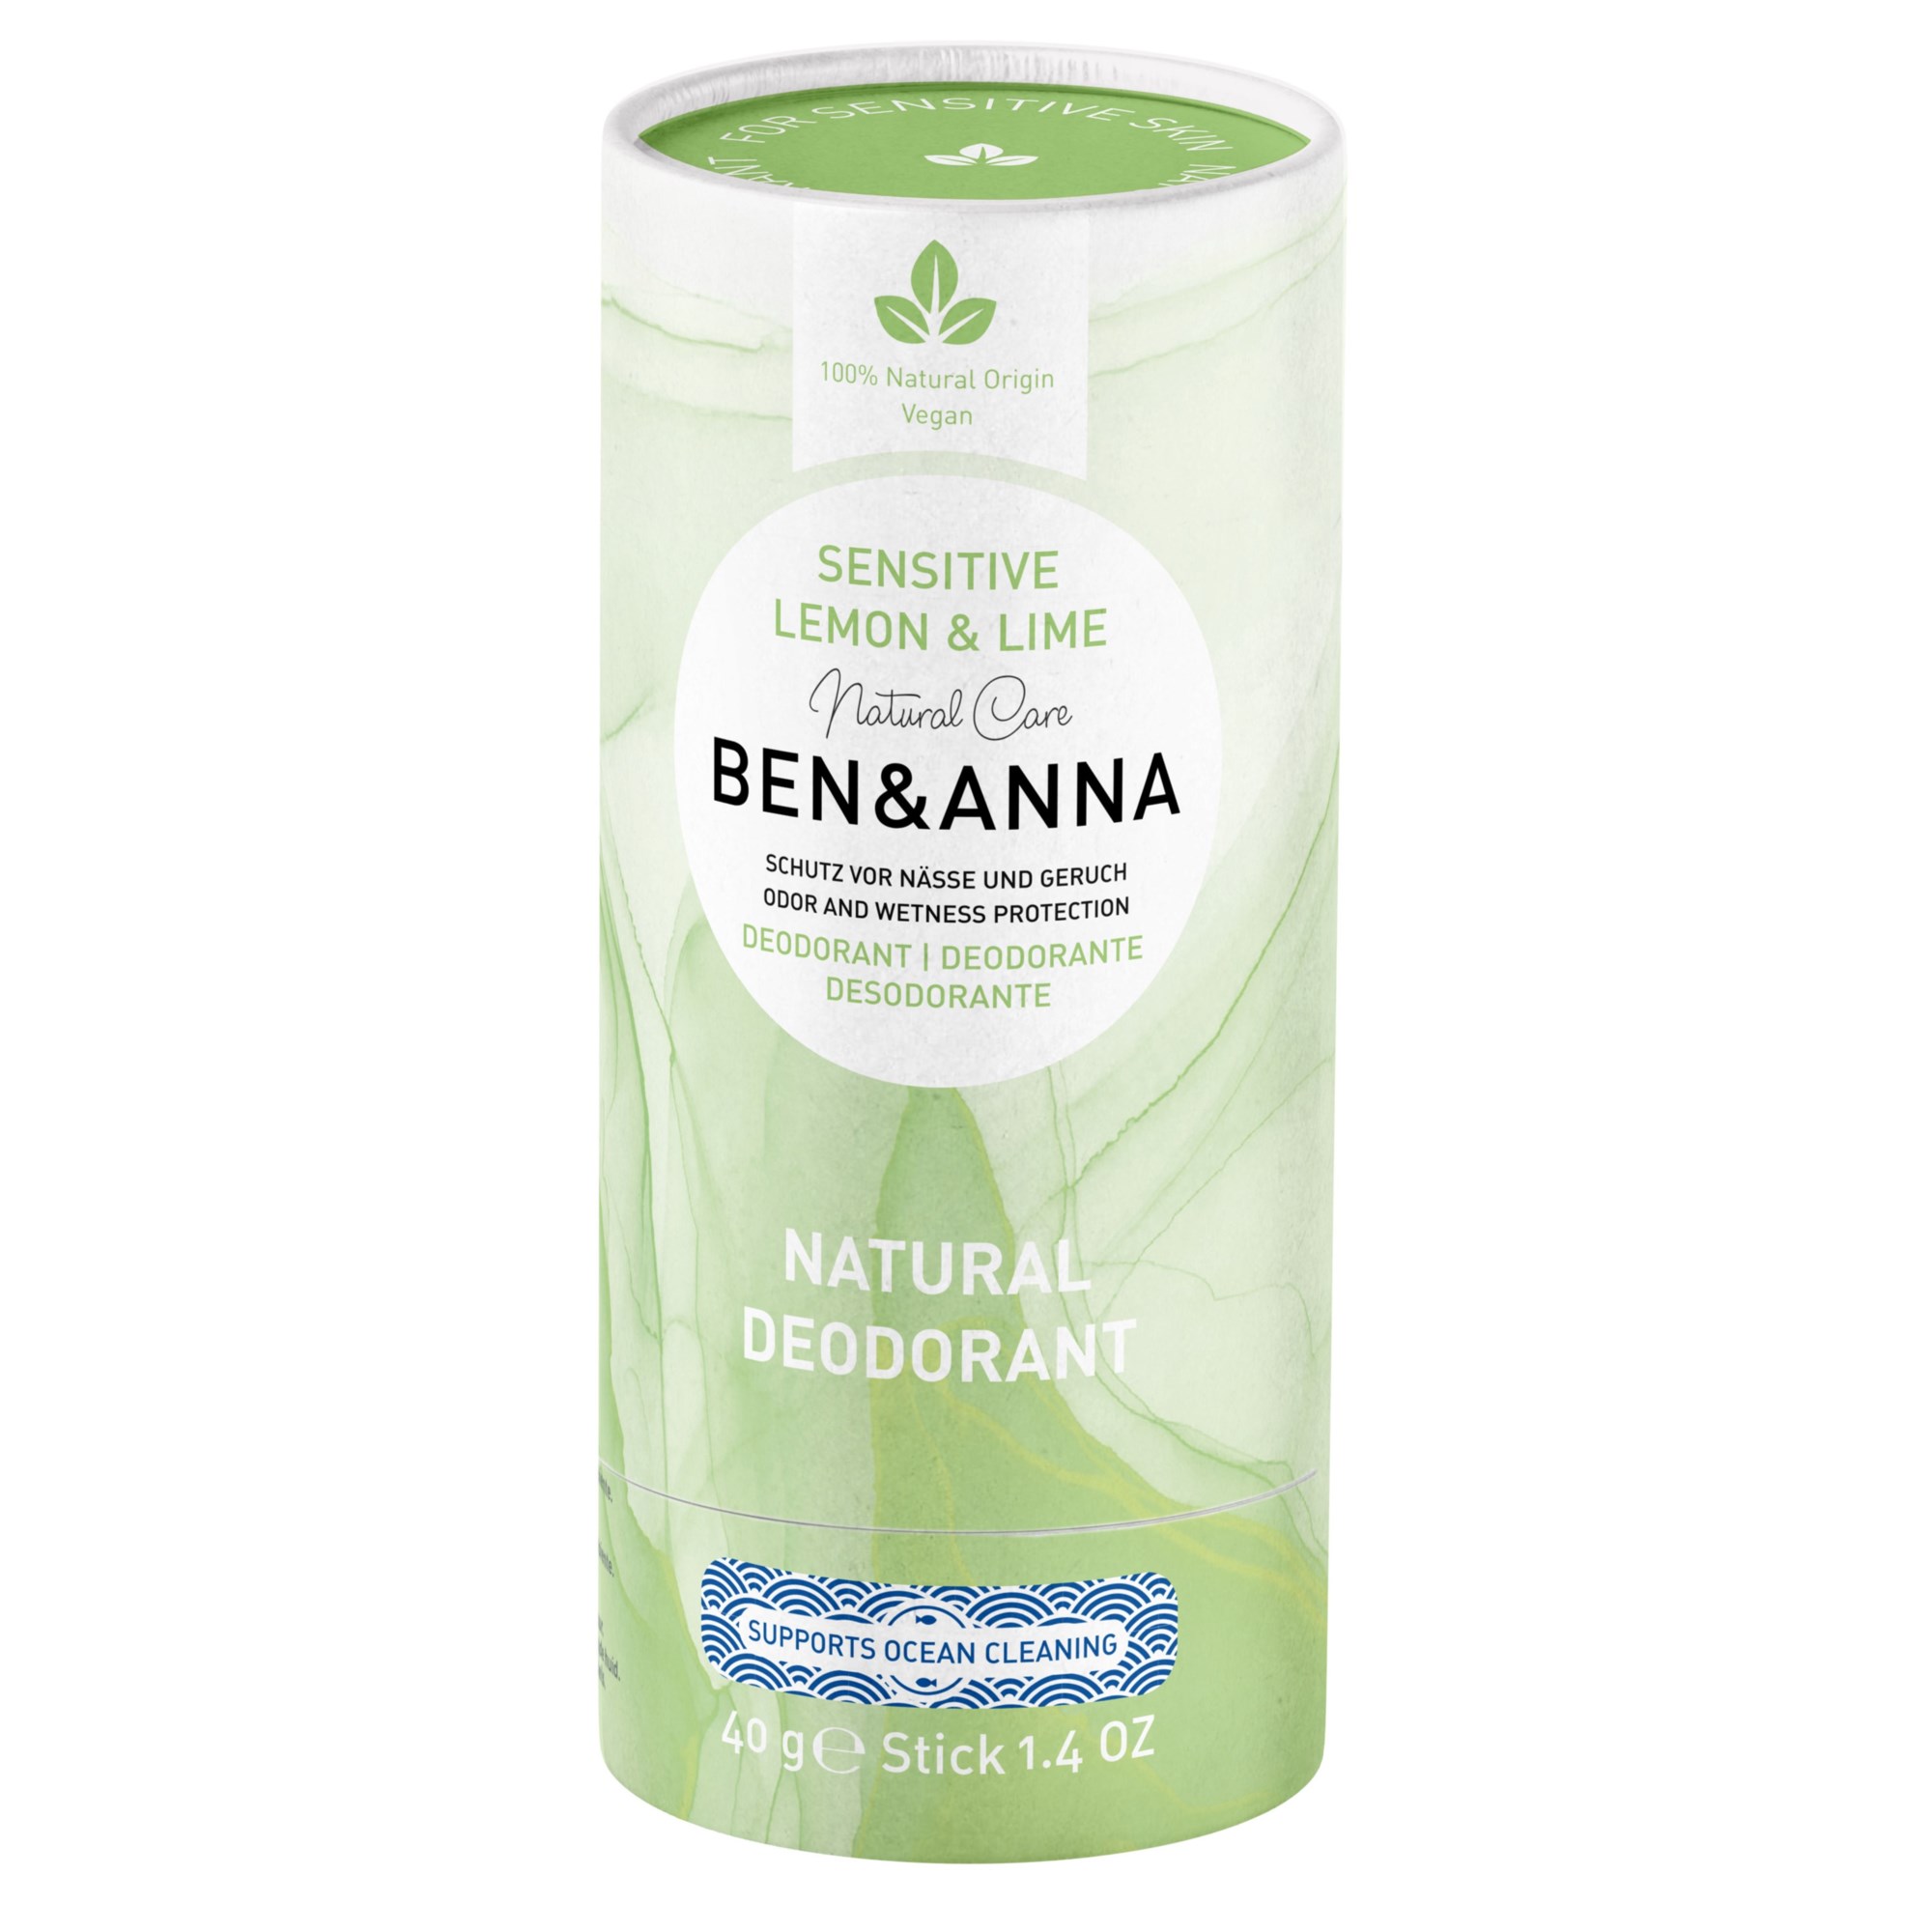 Ben & Anna Deodorant Sensitive Lemon & Lime  60 g